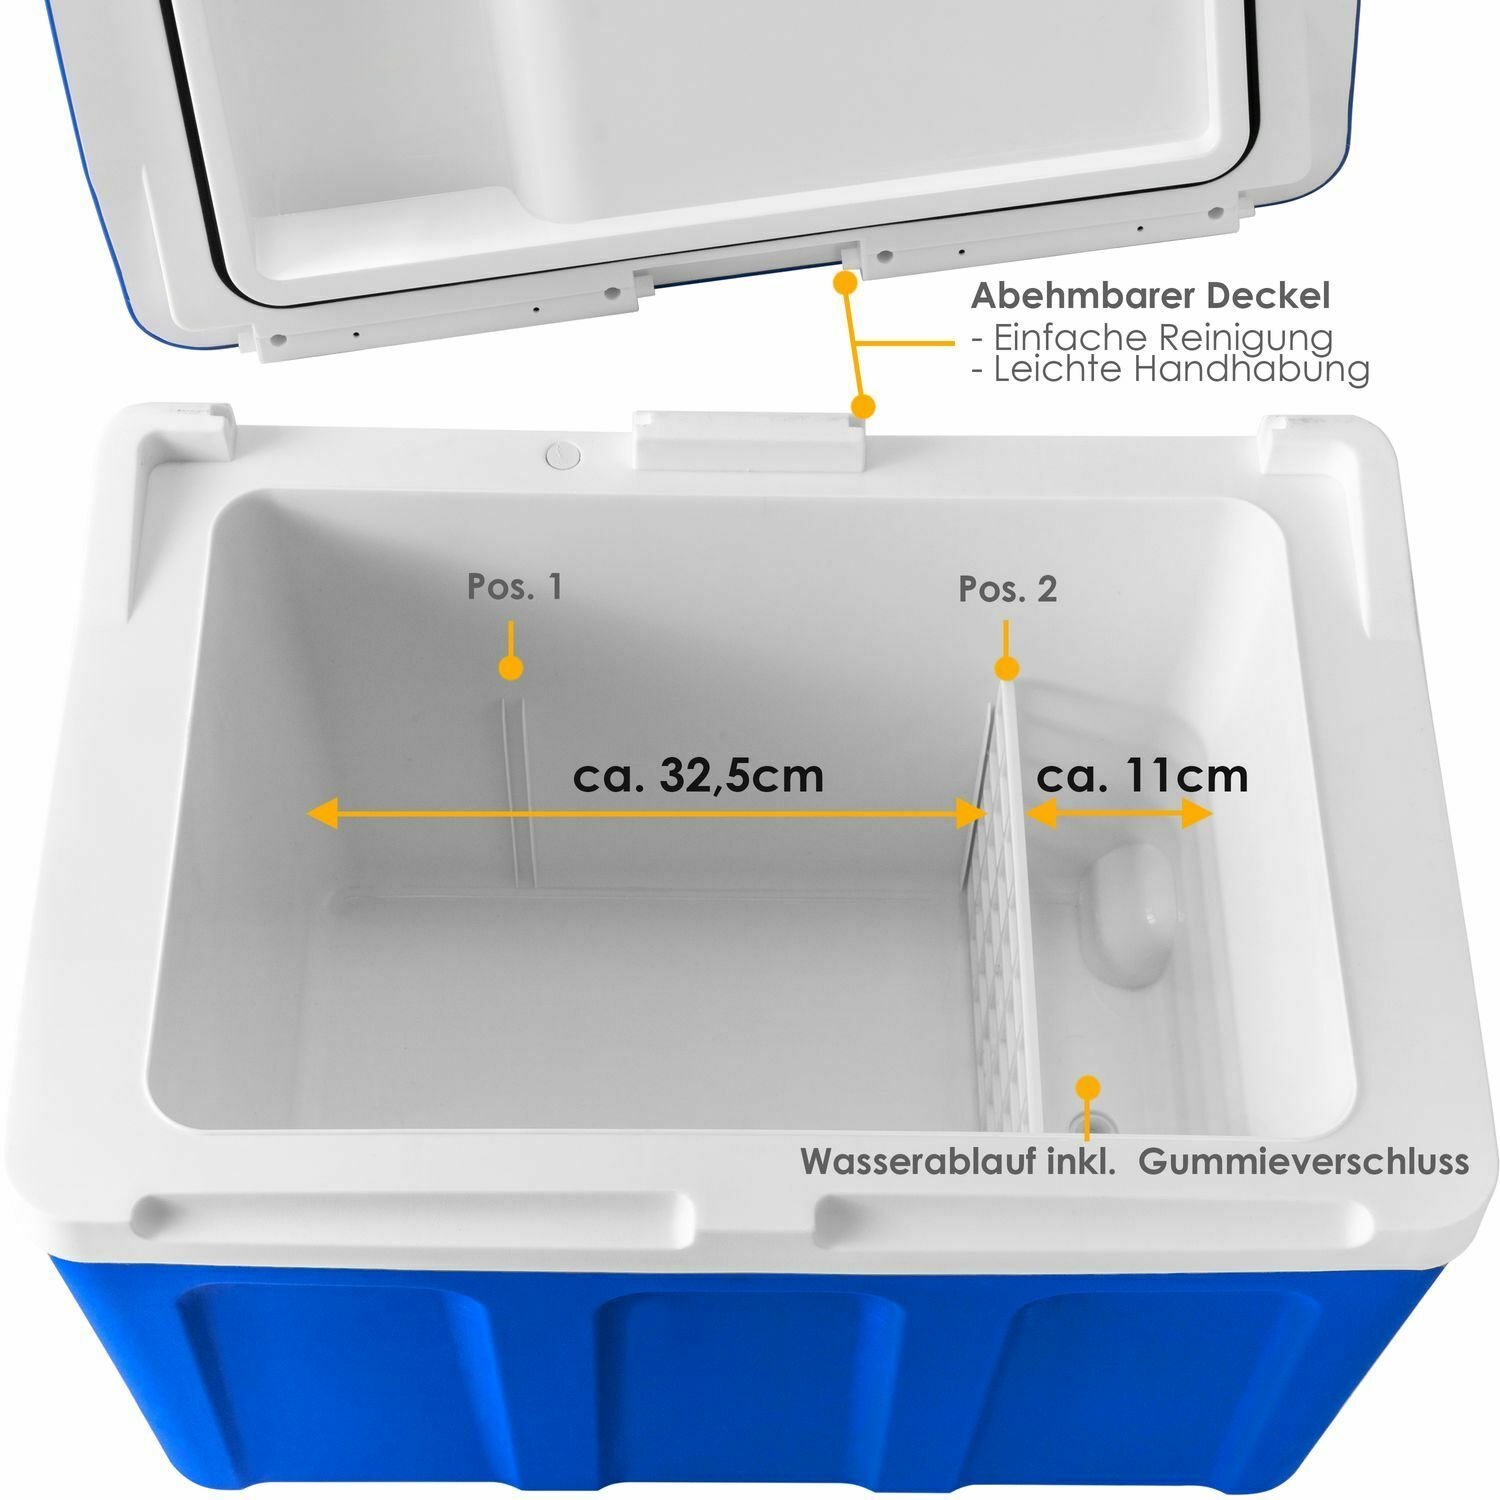 40 Liter Kühlbox, mobile Kühltruhe, Mini-Kühlschrank 12 Volt / 230